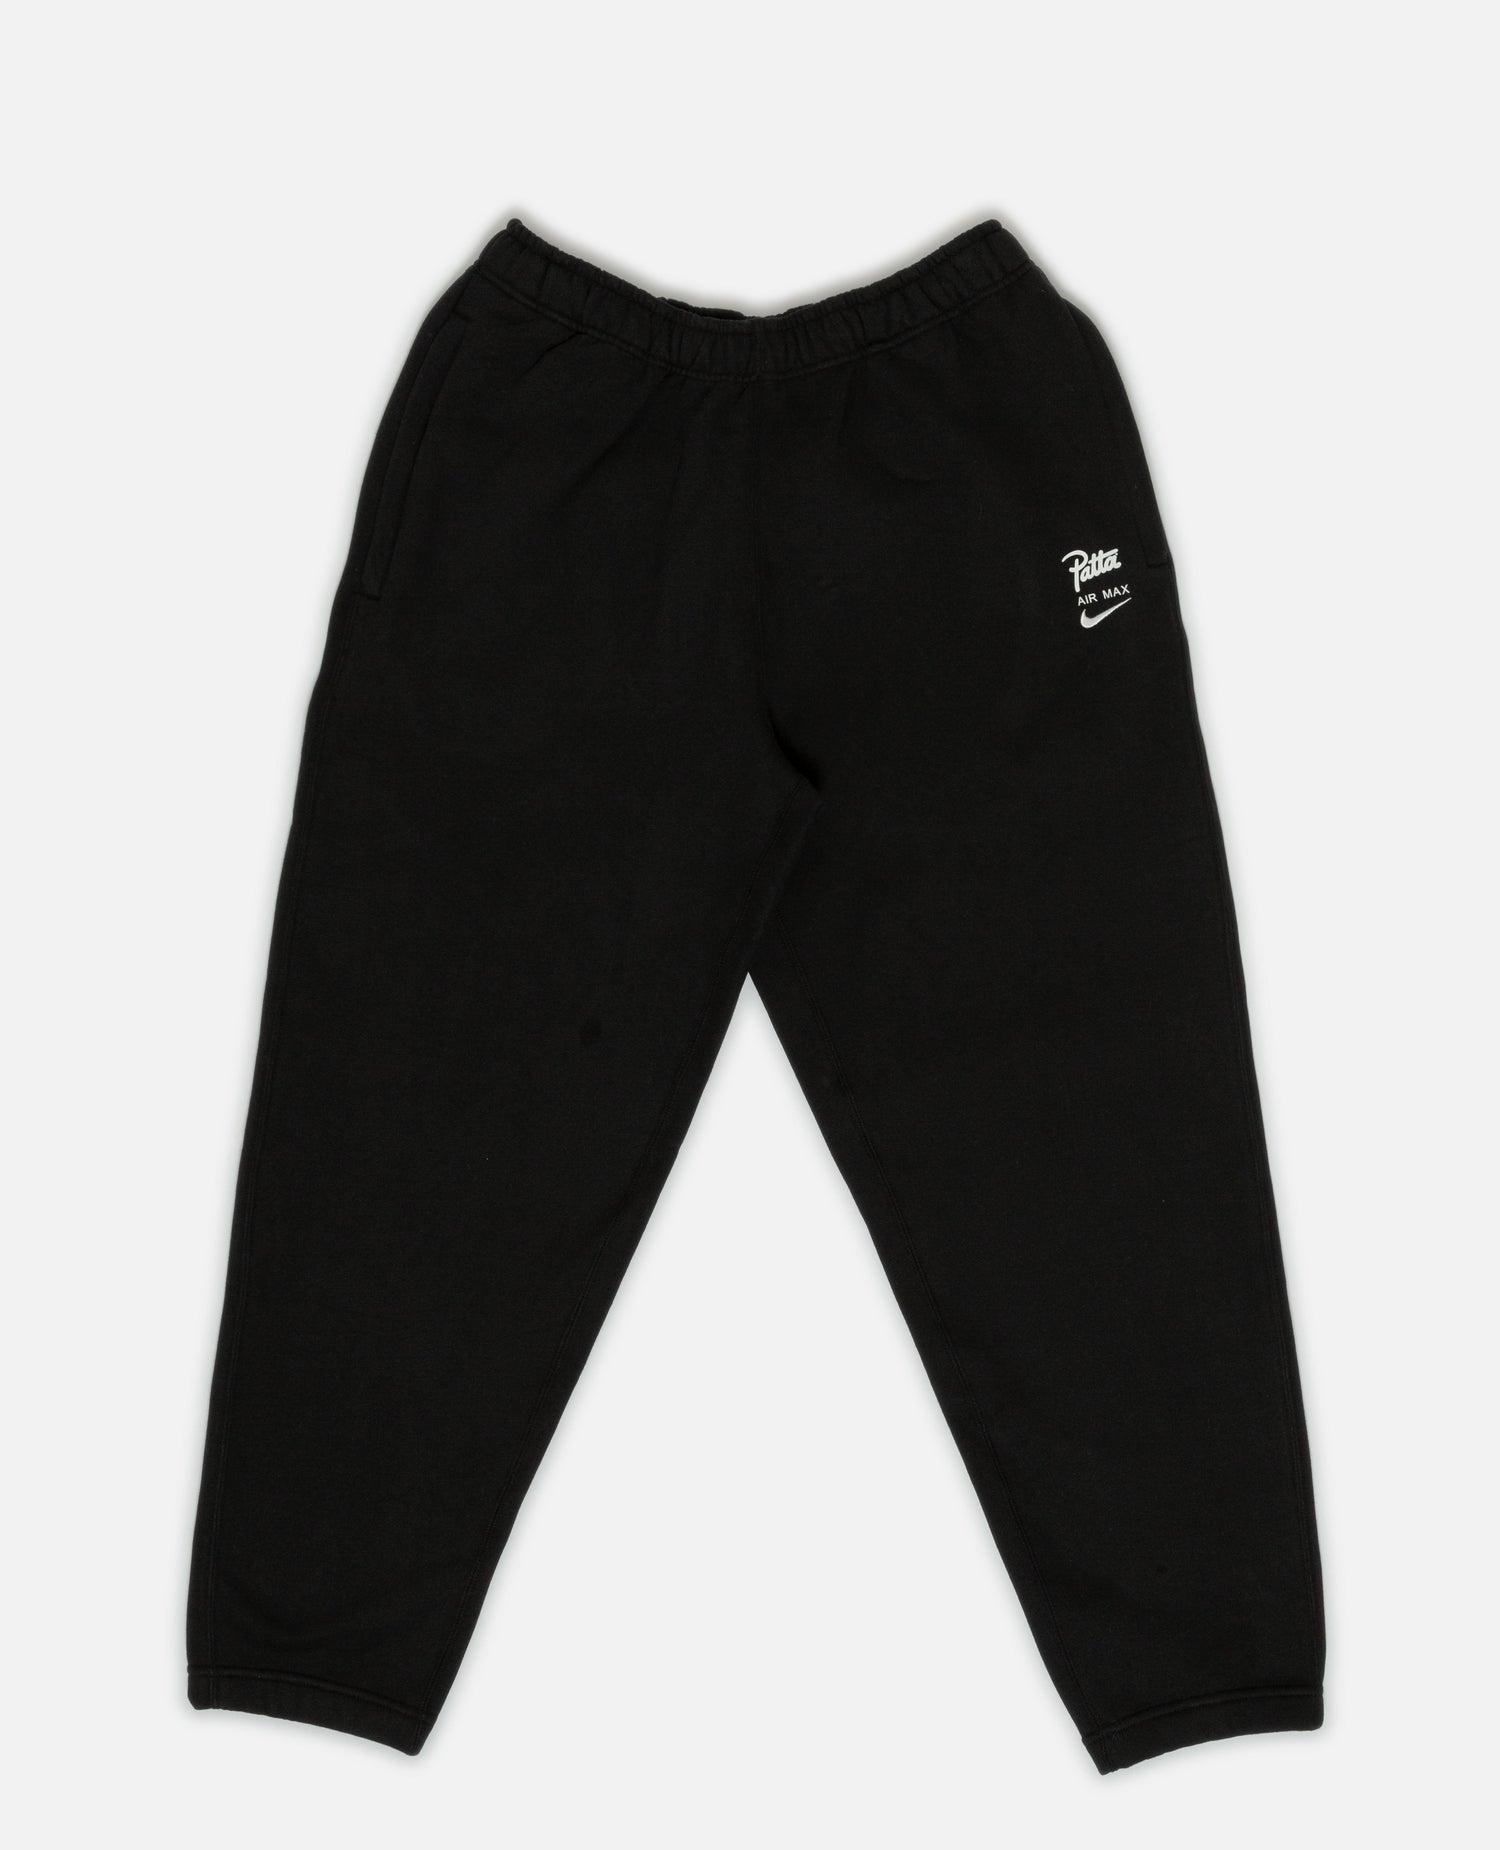 Nike x Patta Wave Five Jogging Pants (Black)